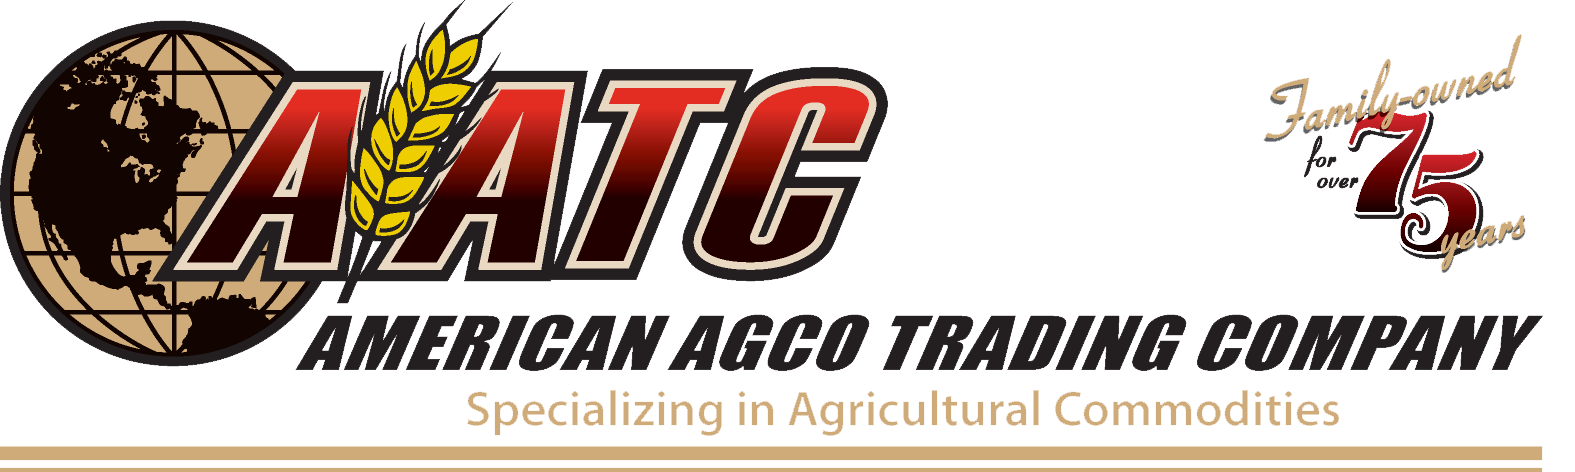 Agco Logo - American AGCO Trading Company - Iowa State Dairy Association